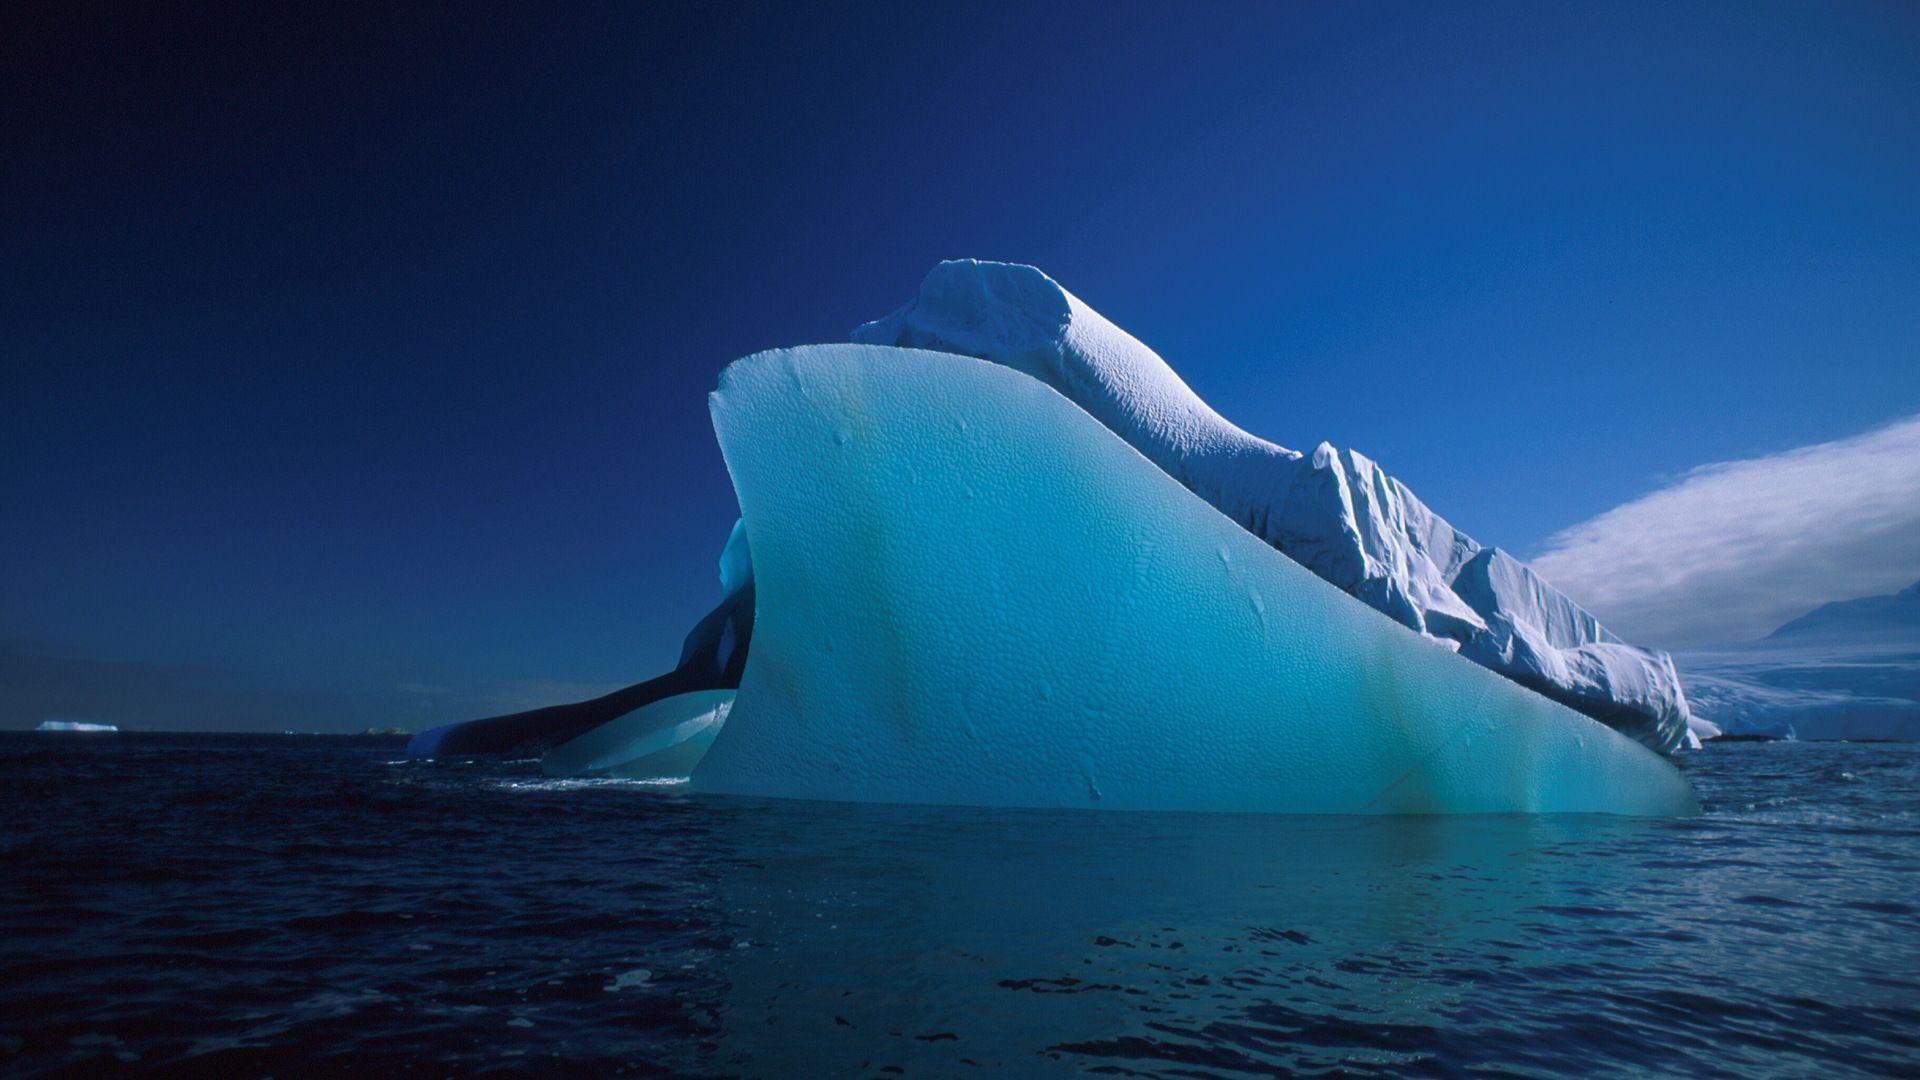 12993 Iceberg Wallpaper Images Stock Photos  Vectors  Shutterstock